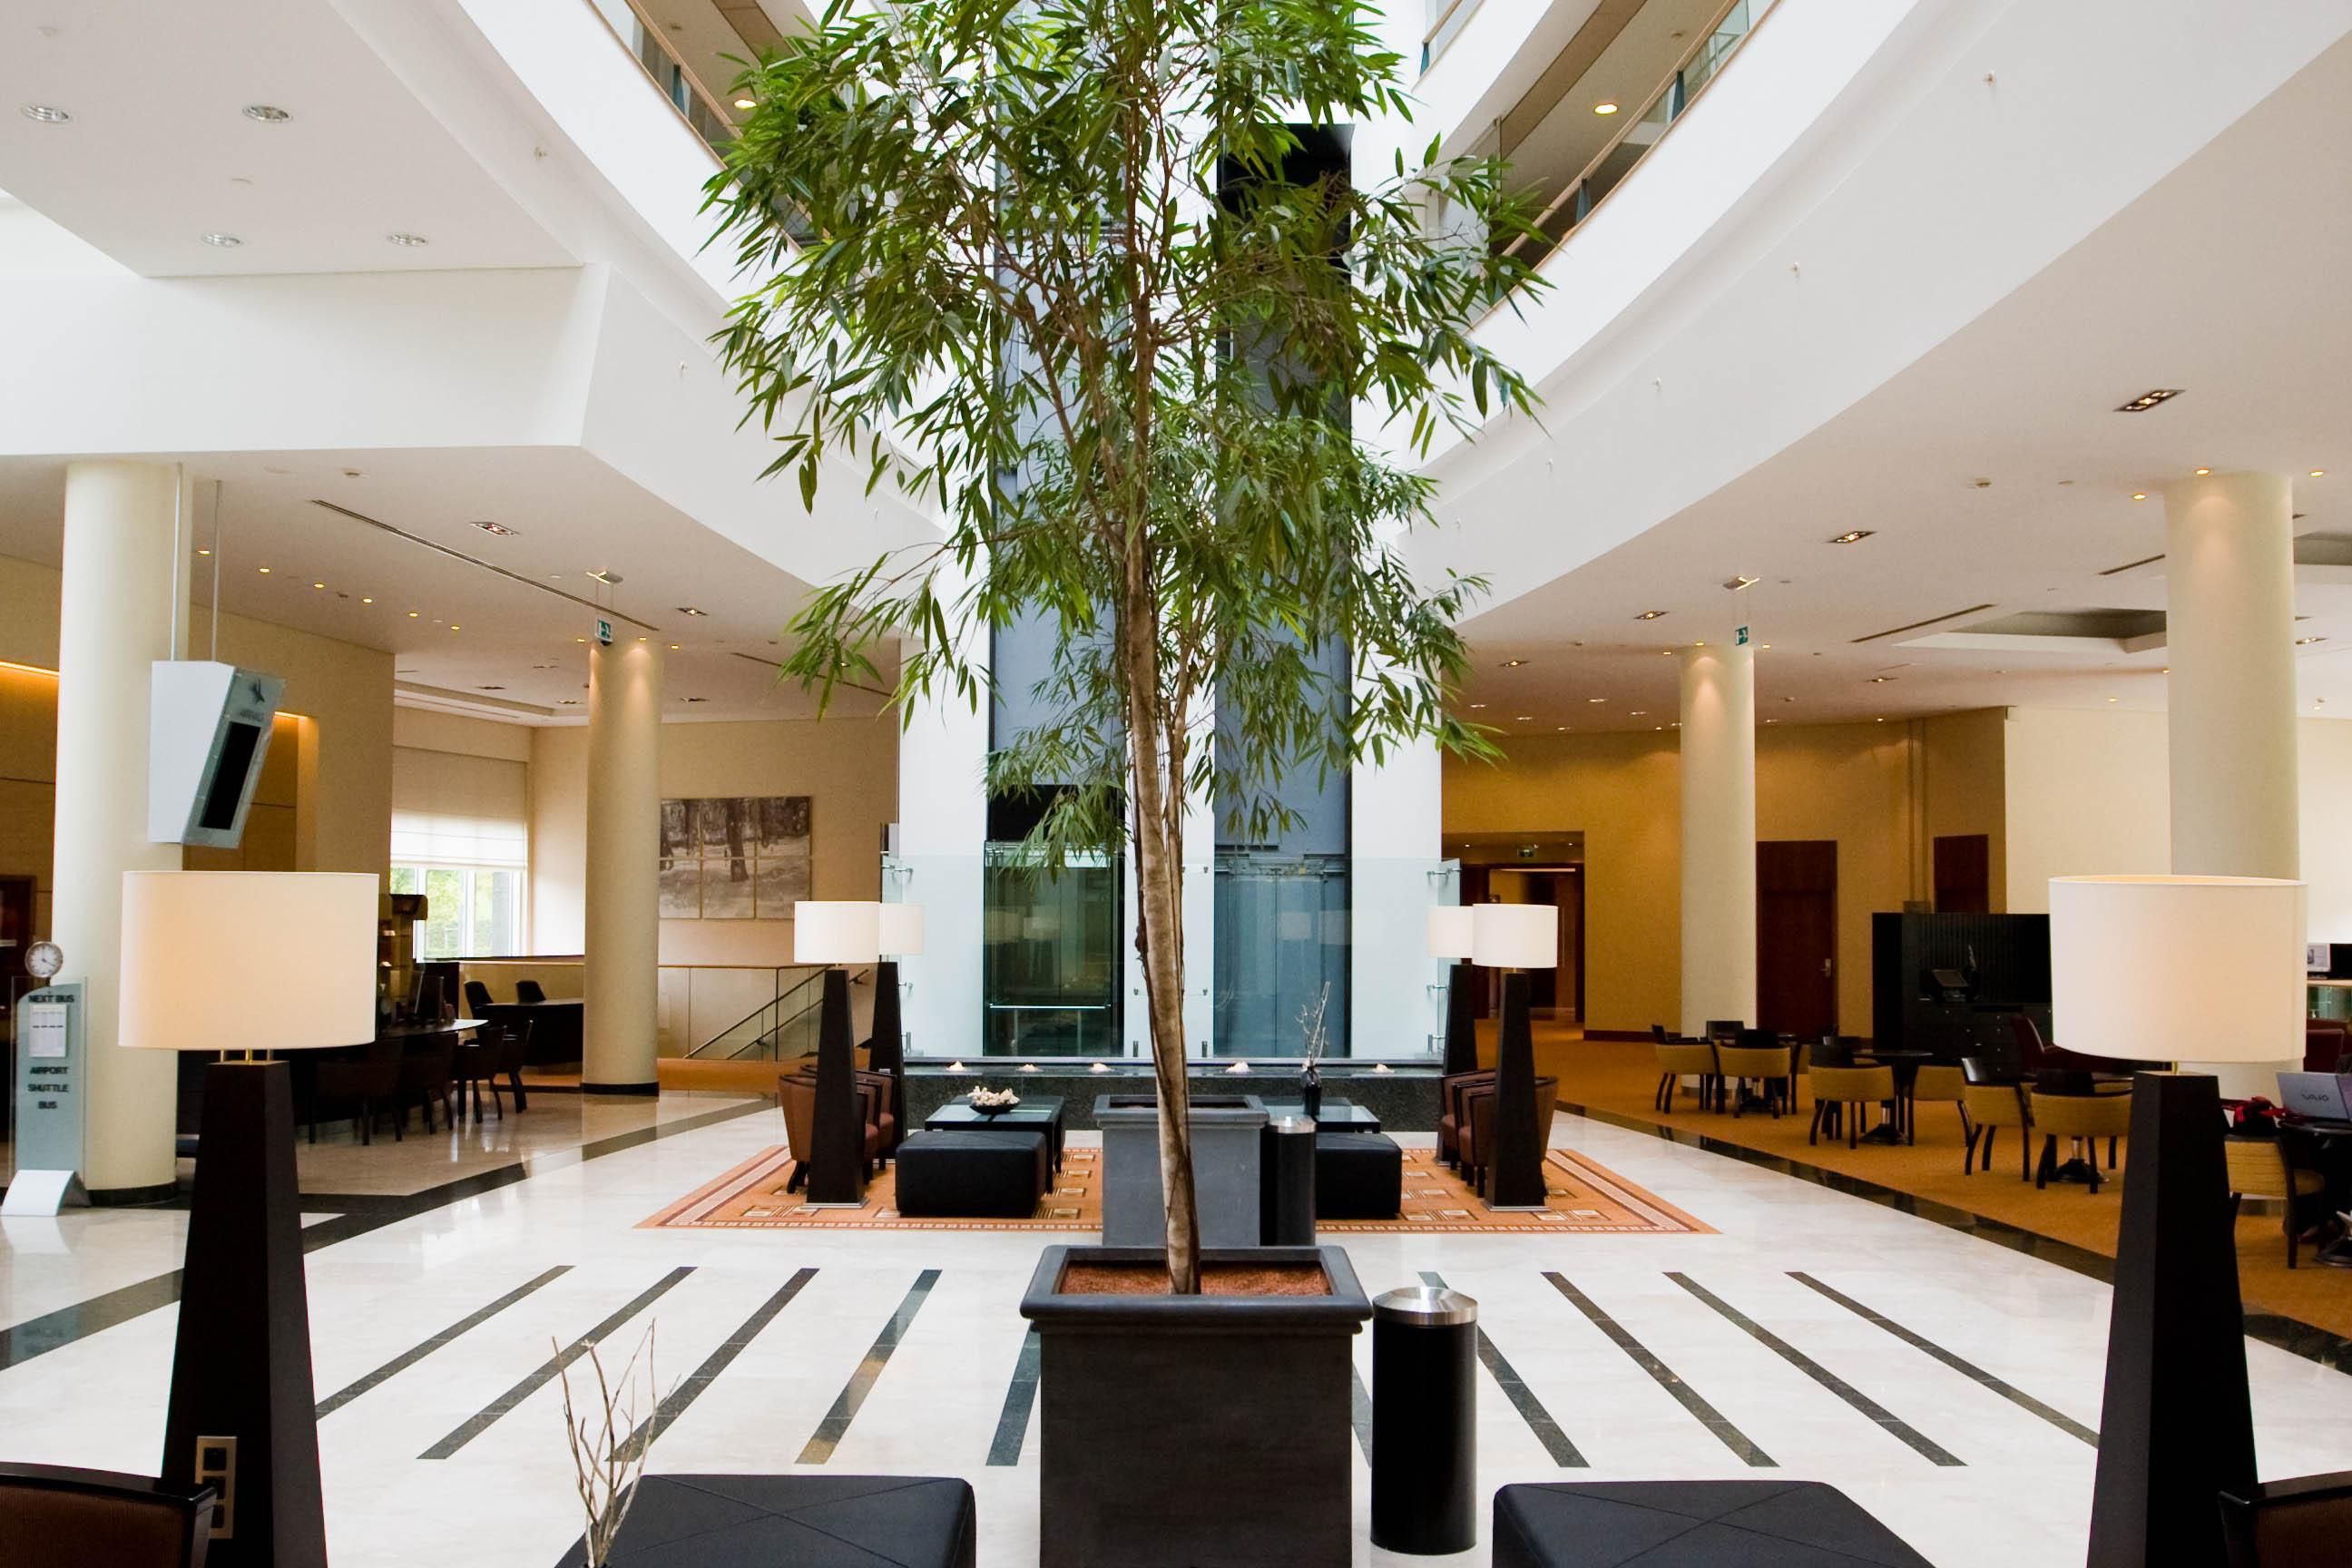 Hotel Lobby with fabulous atrium